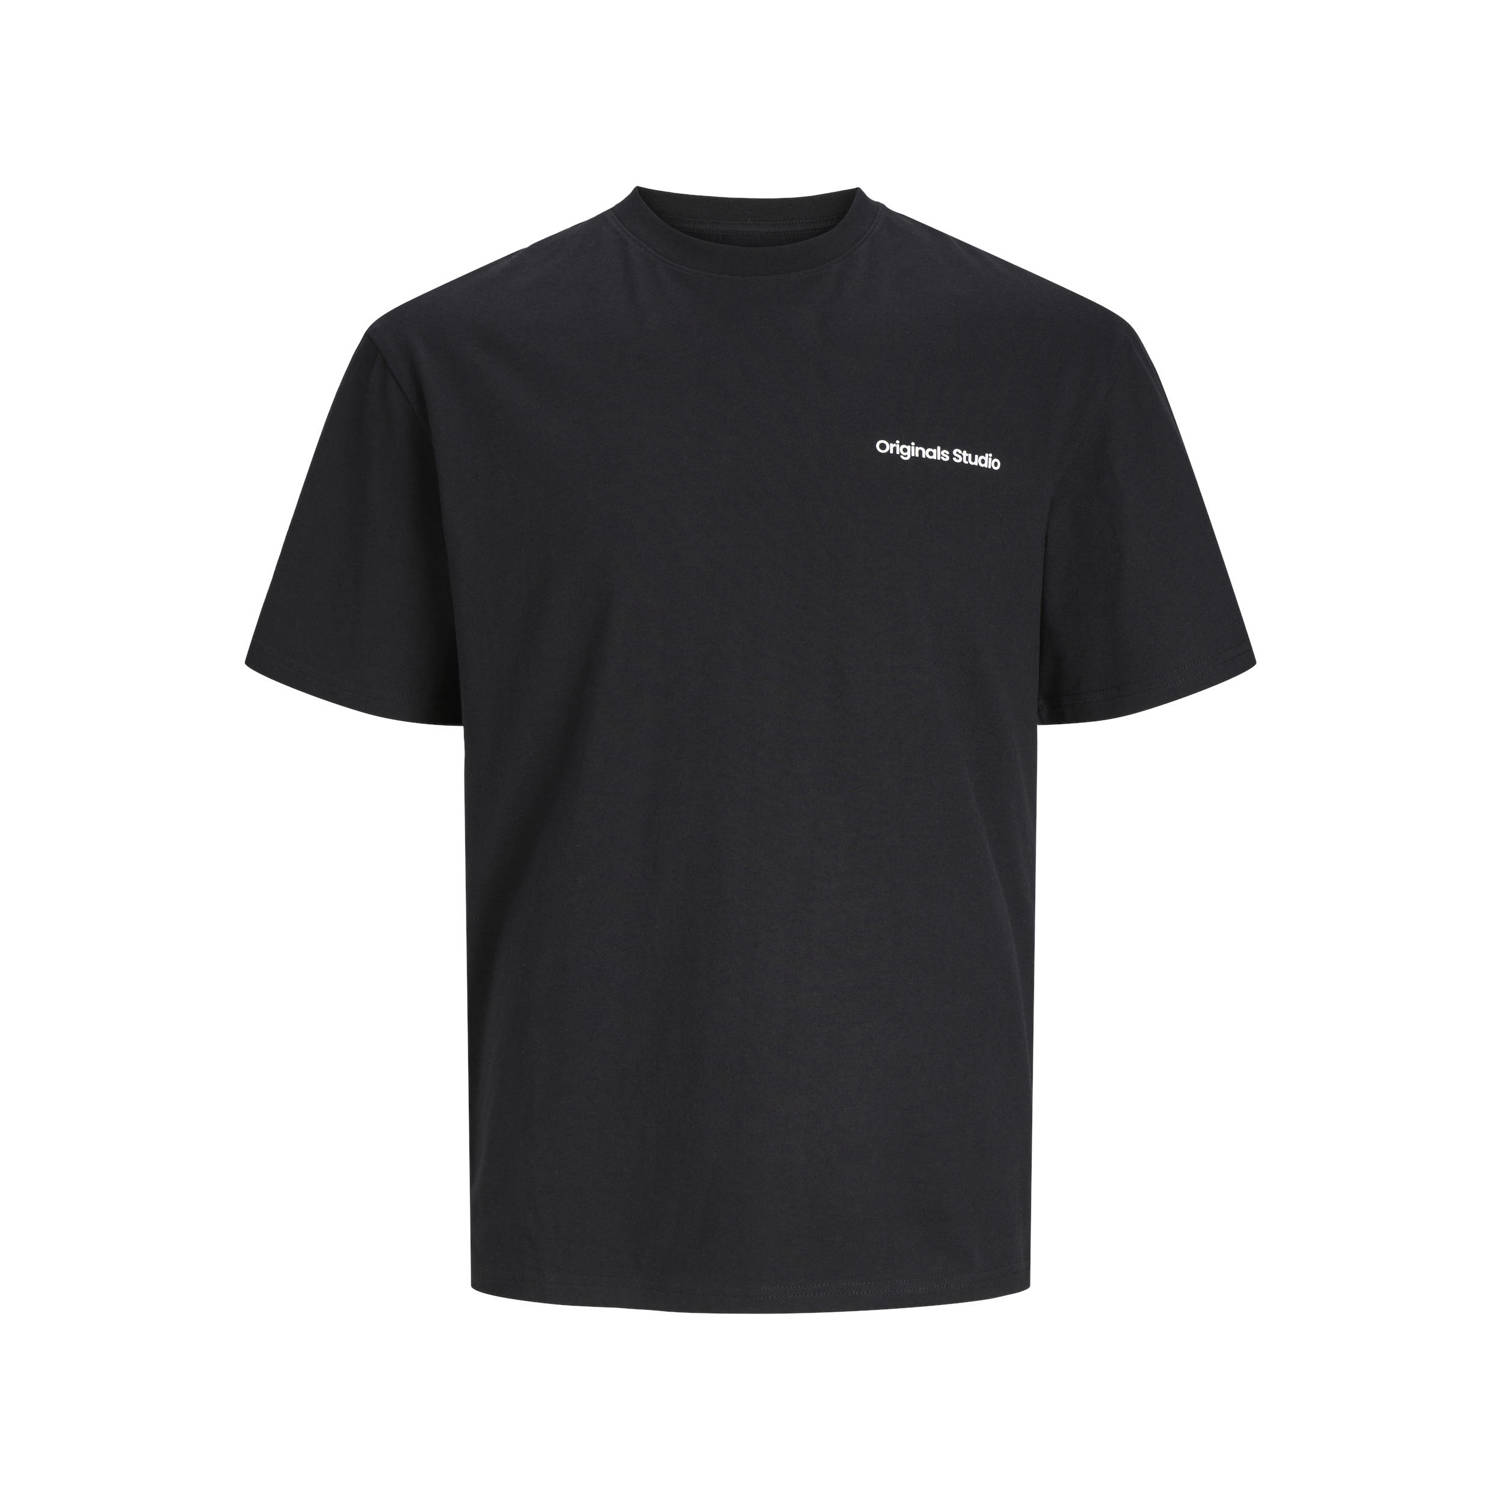 JACK & JONES PLUS SIZE T-shirt Plus Size met backprint zwart